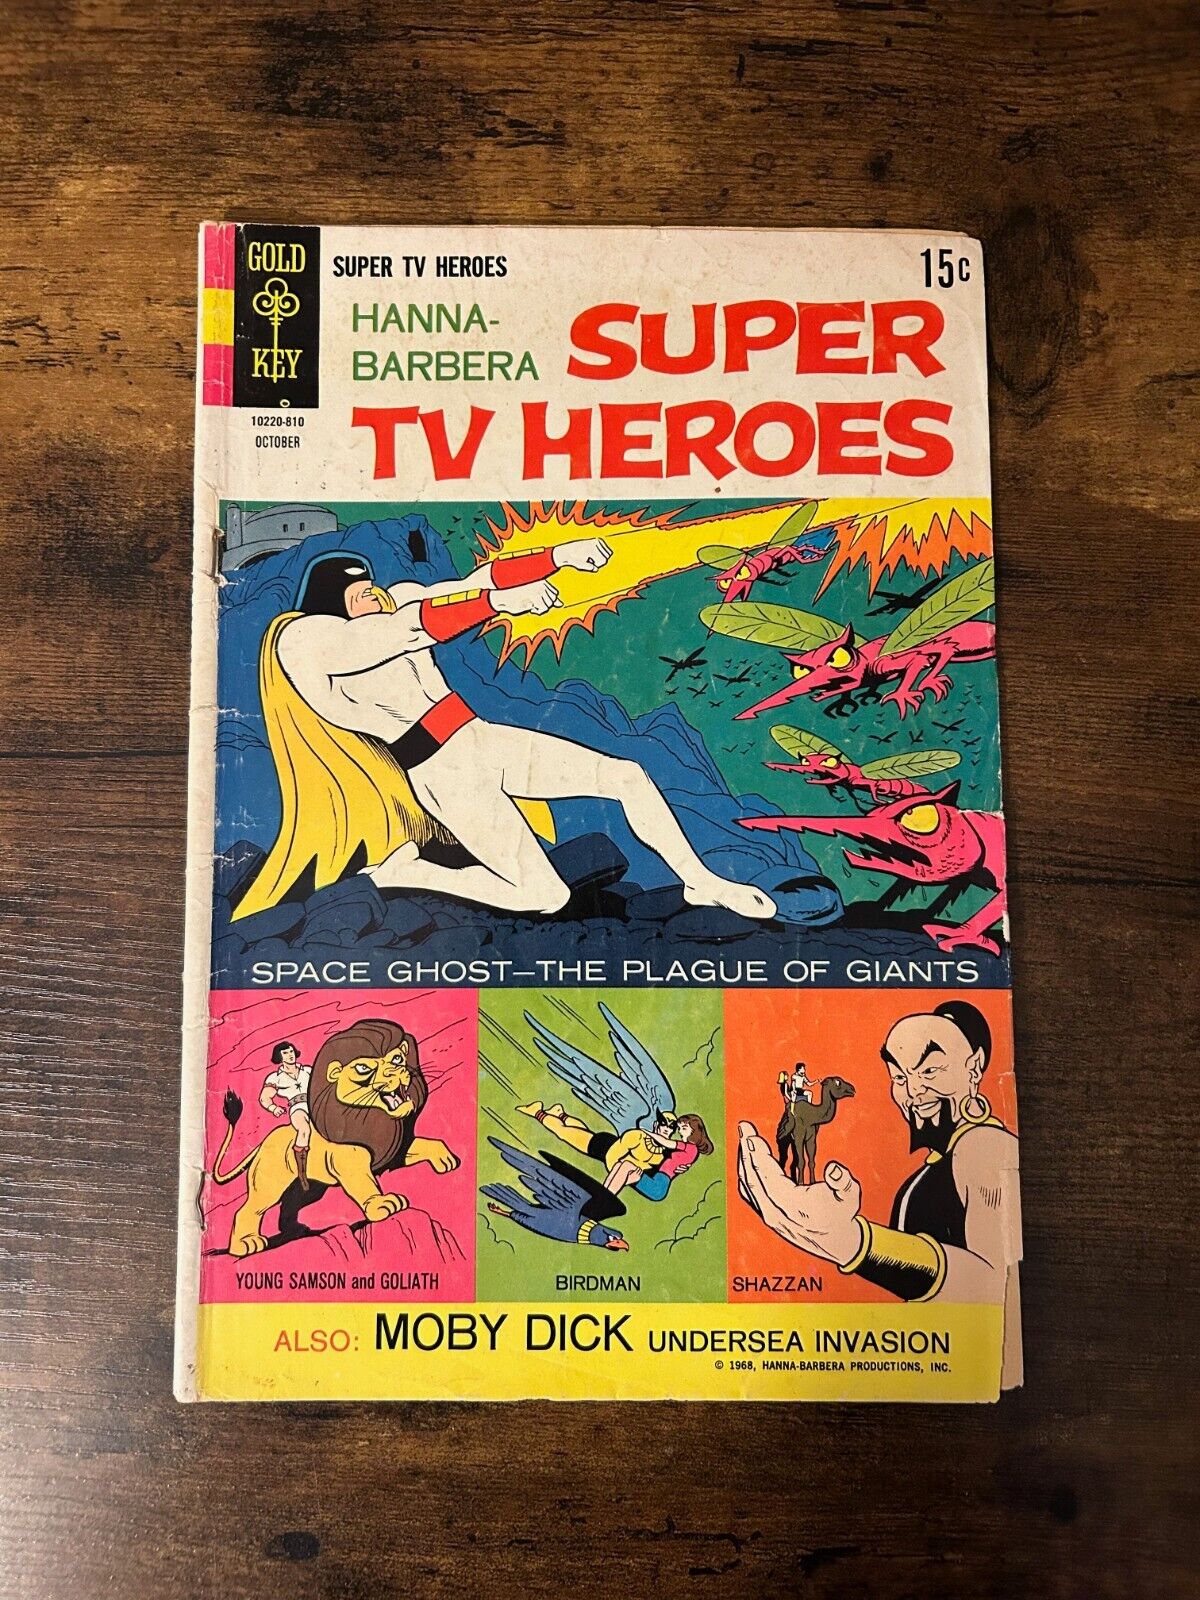 Hanna Barbera Super TV Heroes #3 Gold Key Comics (Oct, 1968) 2.0 GD Space Ghost